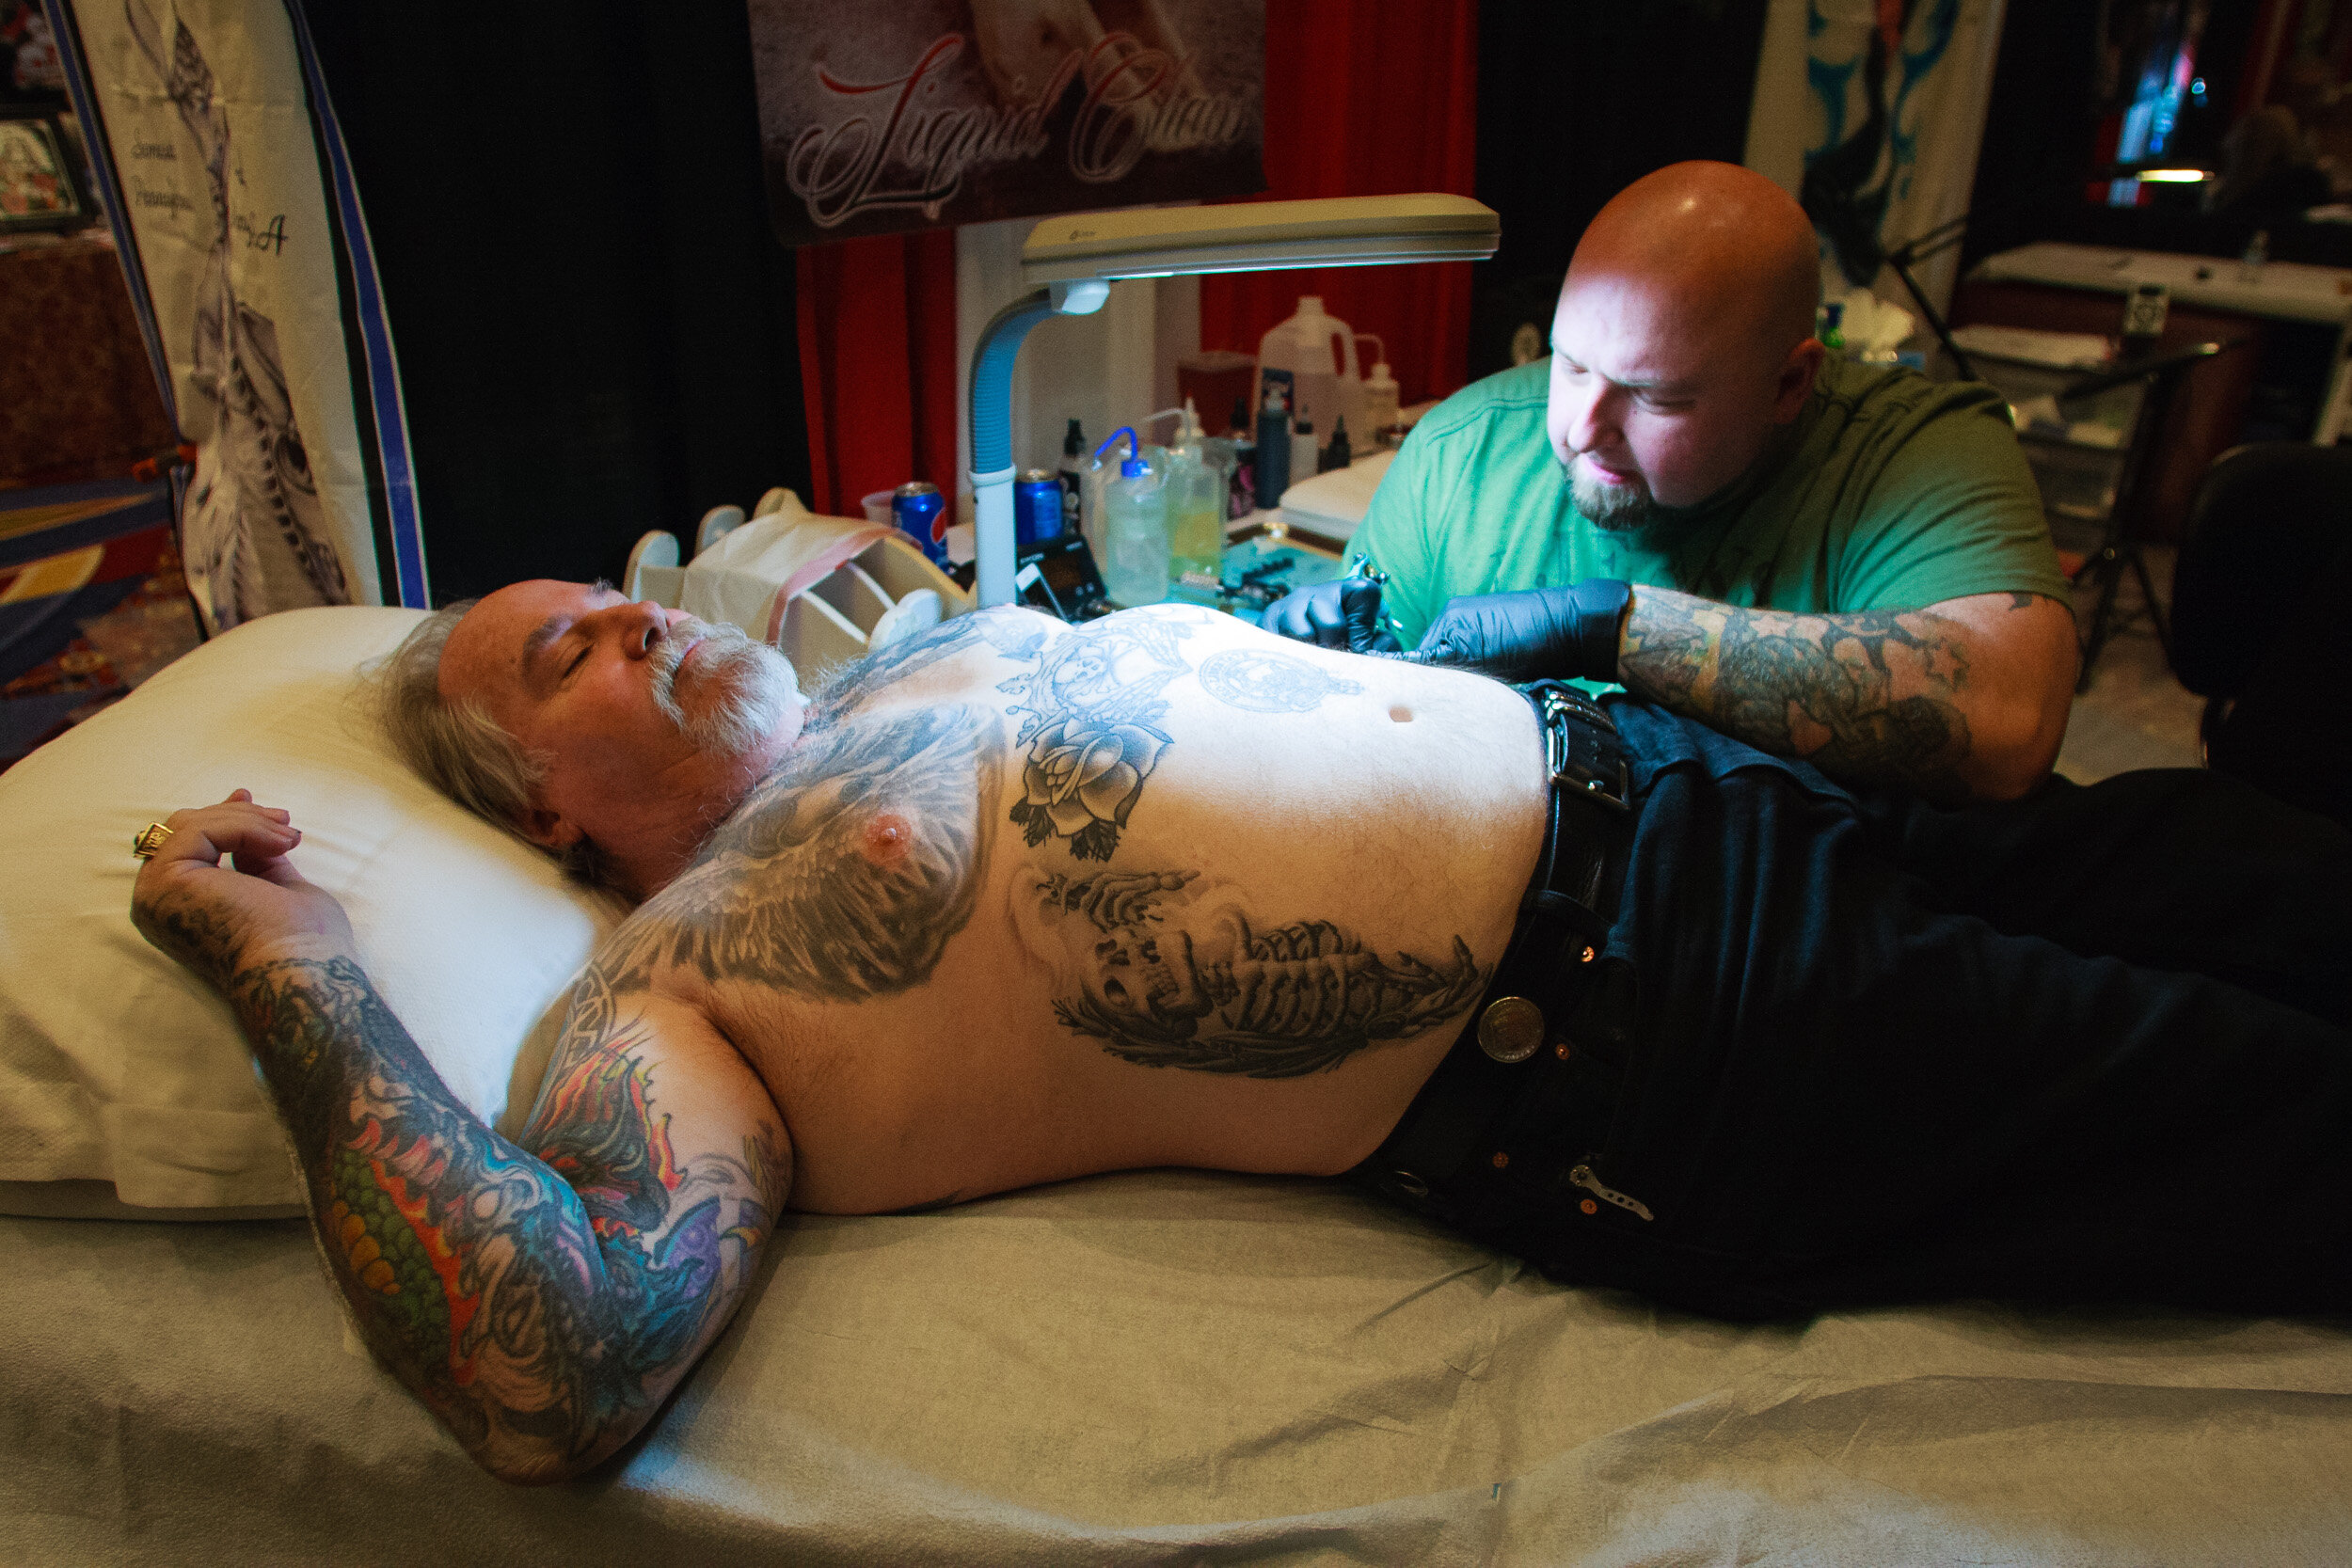  A man gets tattooed at the D.C. Tattoo Expo at the Crystal Gateway Marriott in Arlington, Va., Jan. 17, 2015. 